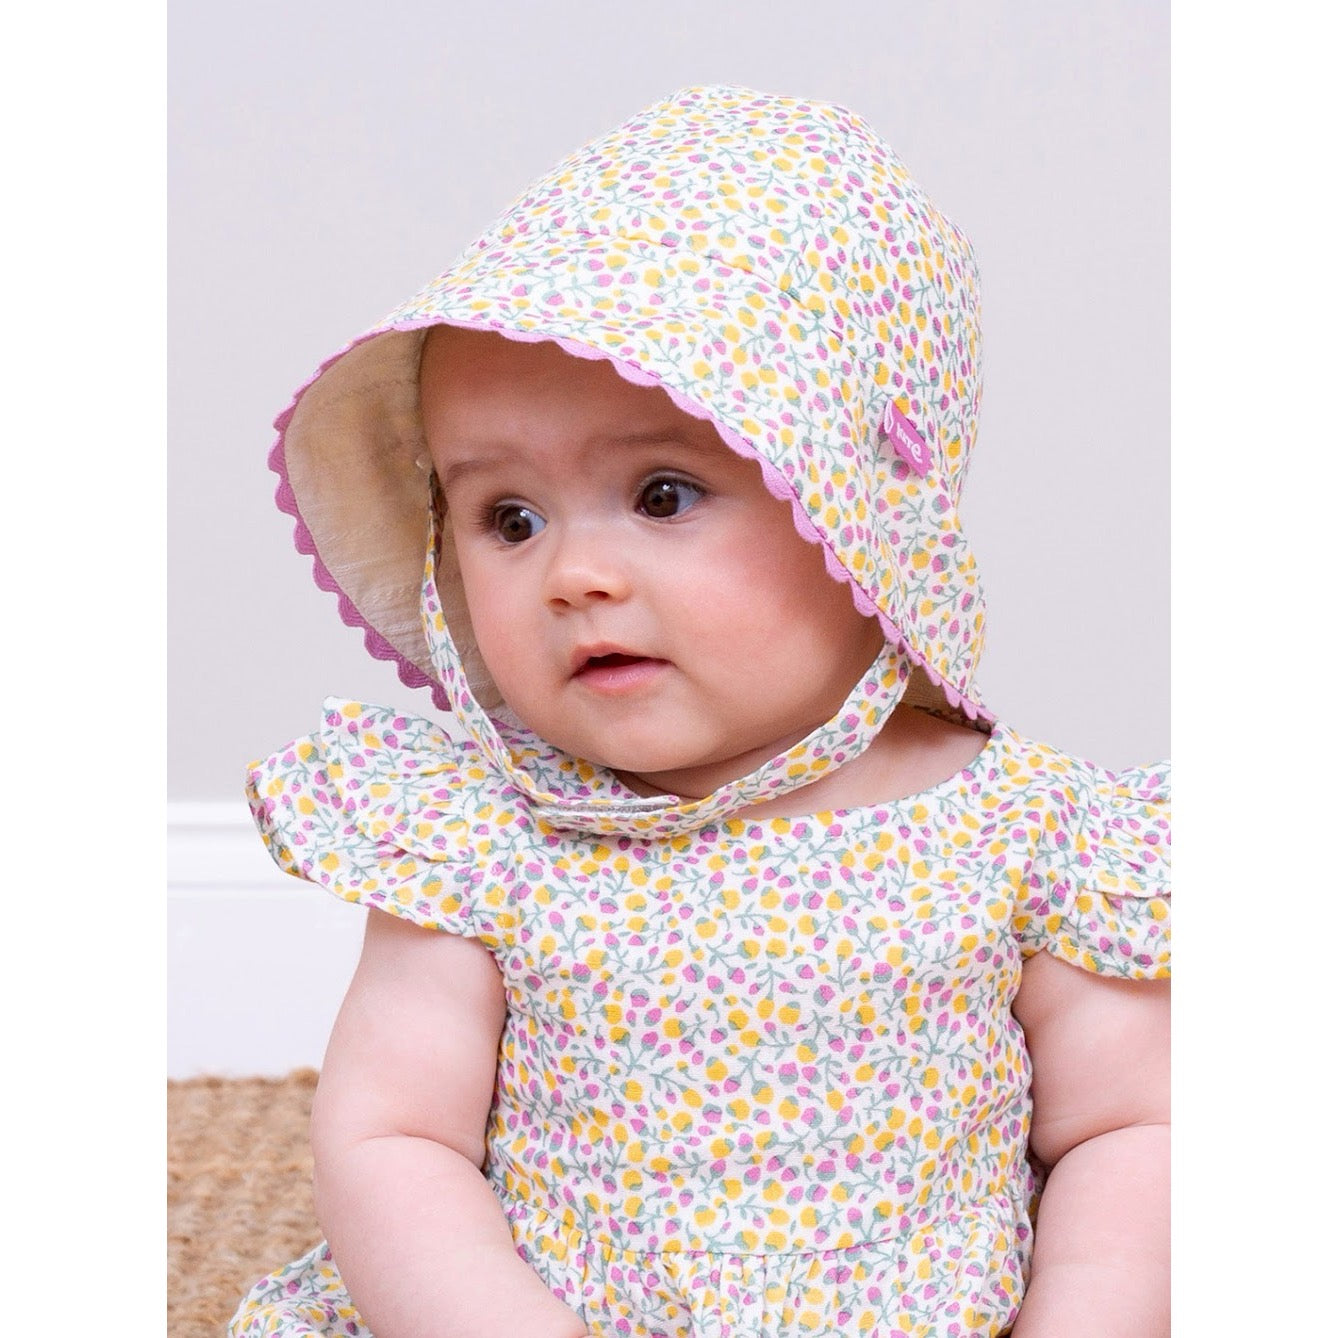 Kite Little Bud Reversible Infant Sun Hat 3781 Clothing 0-6M / Multi,6-12M / Multi,12-24M / Multi